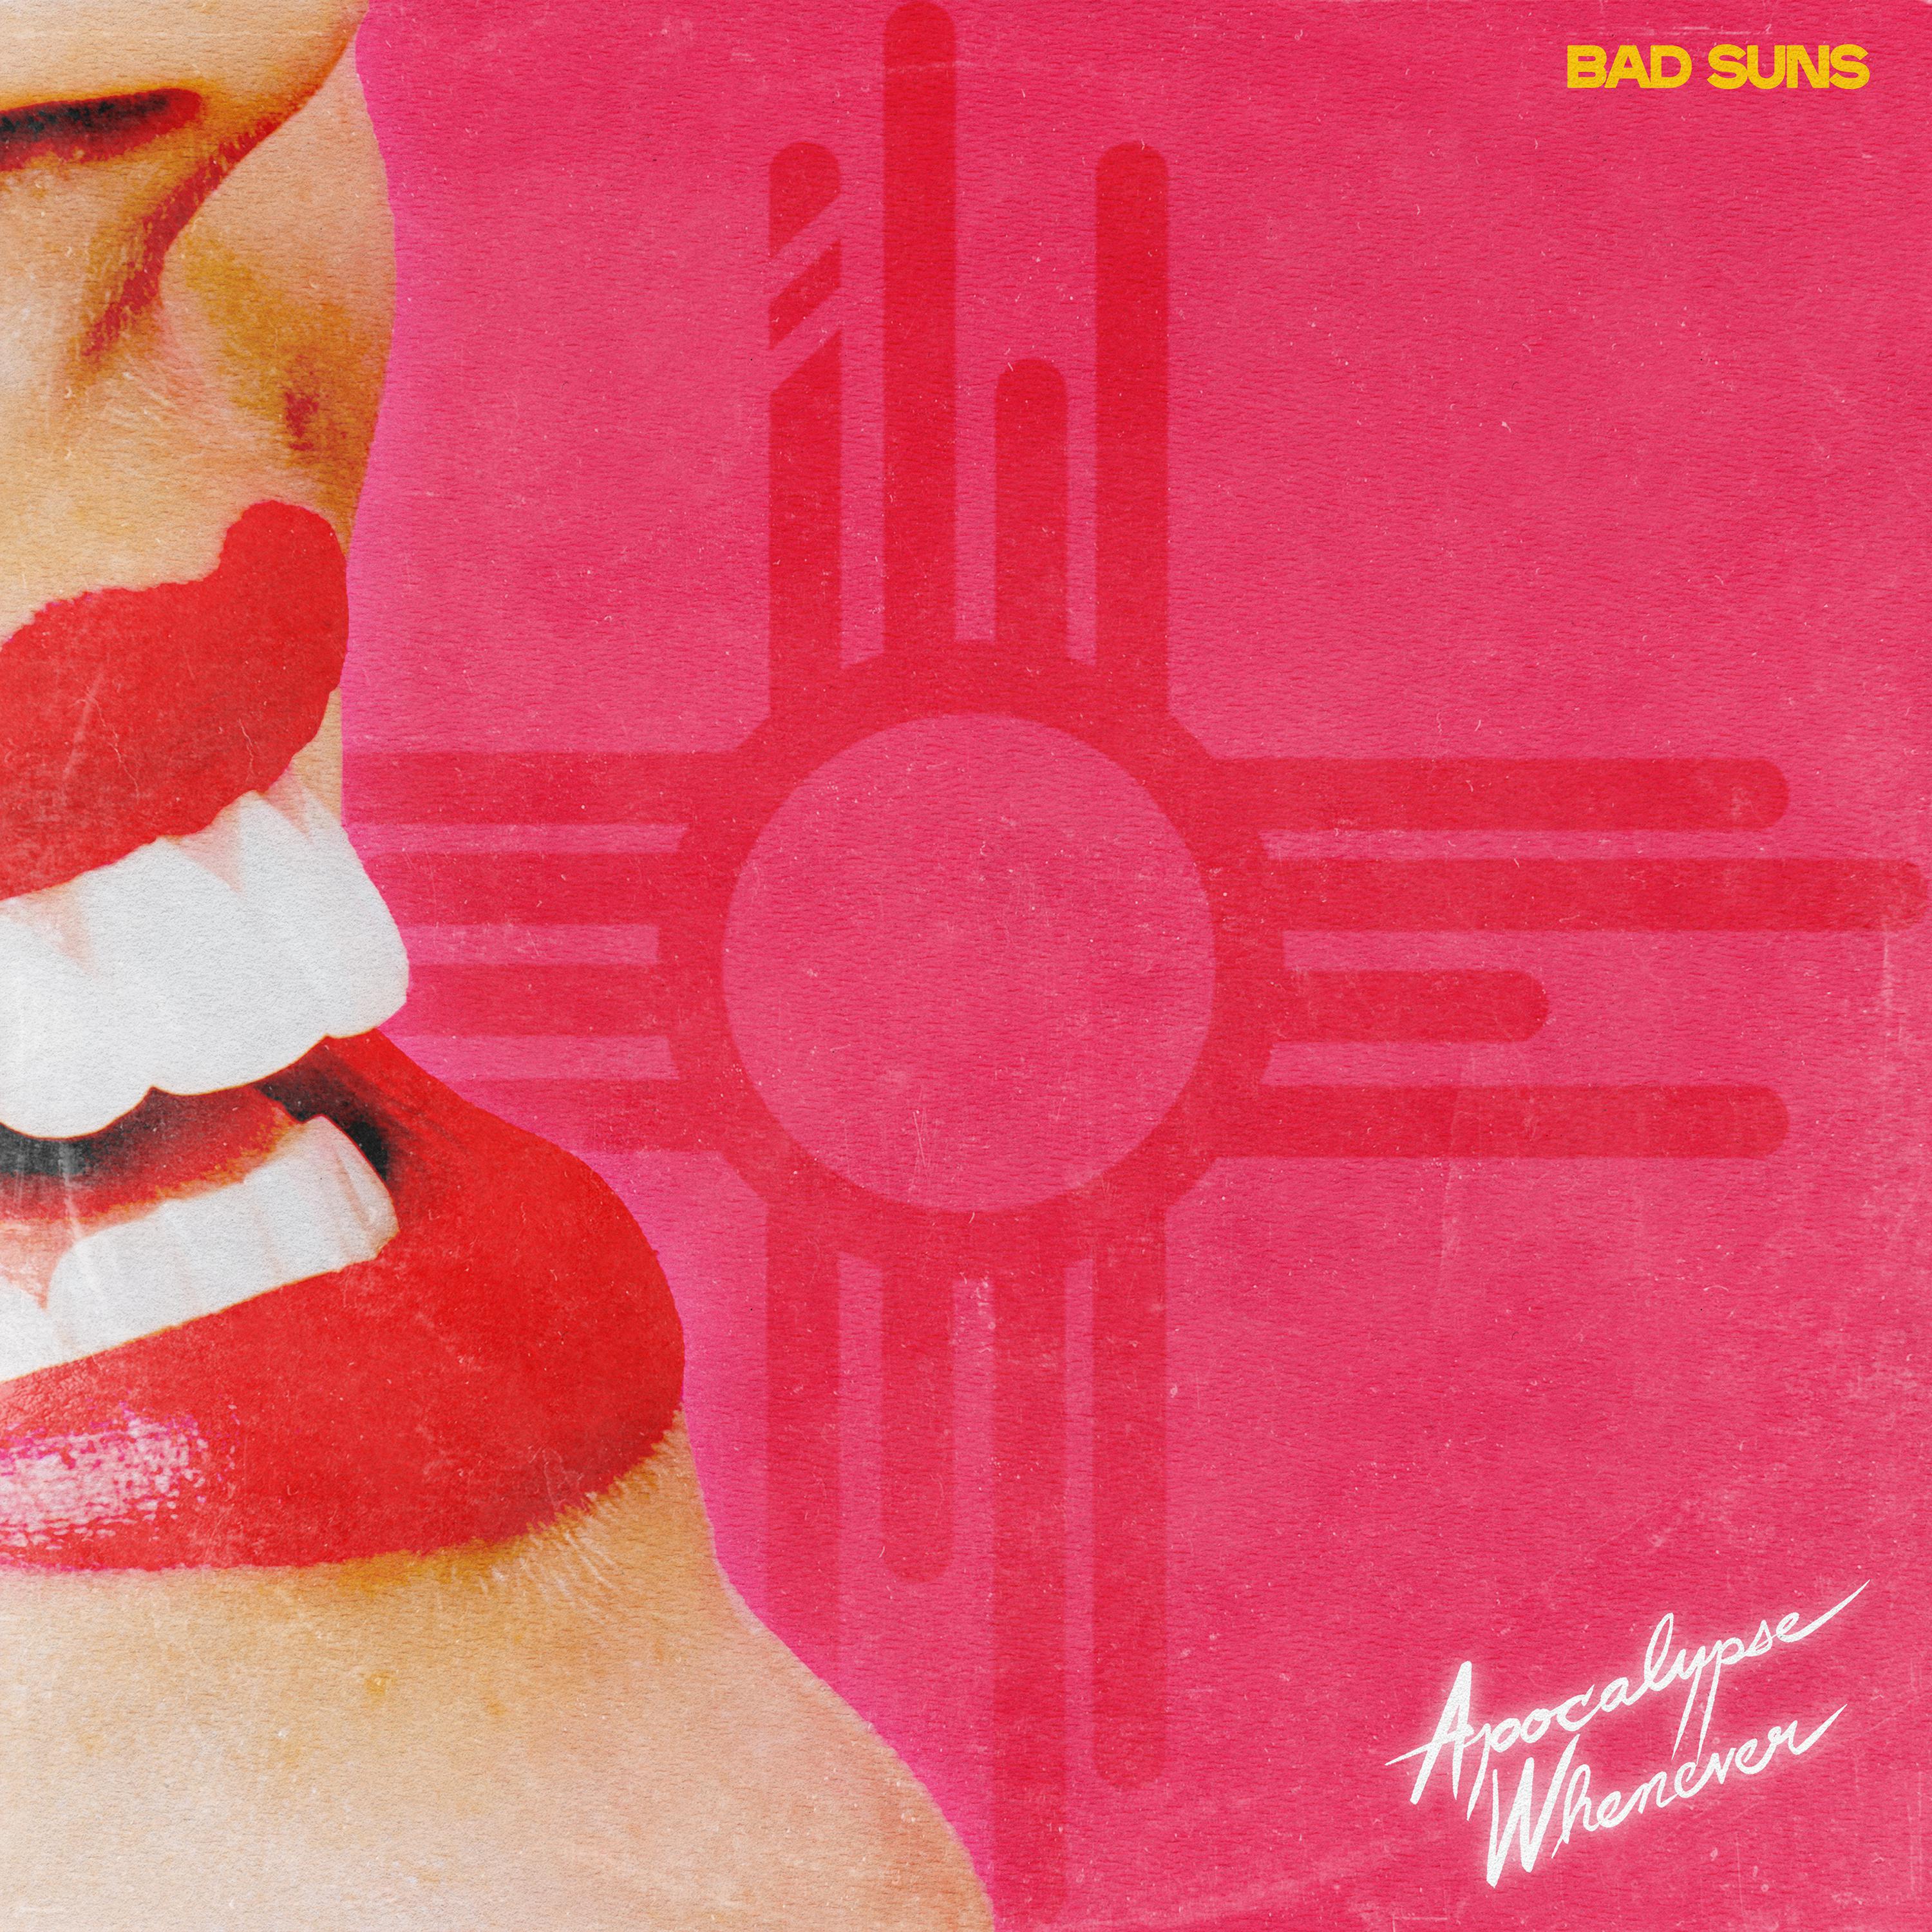 Bad Suns - Nightclub (Waiting for You)